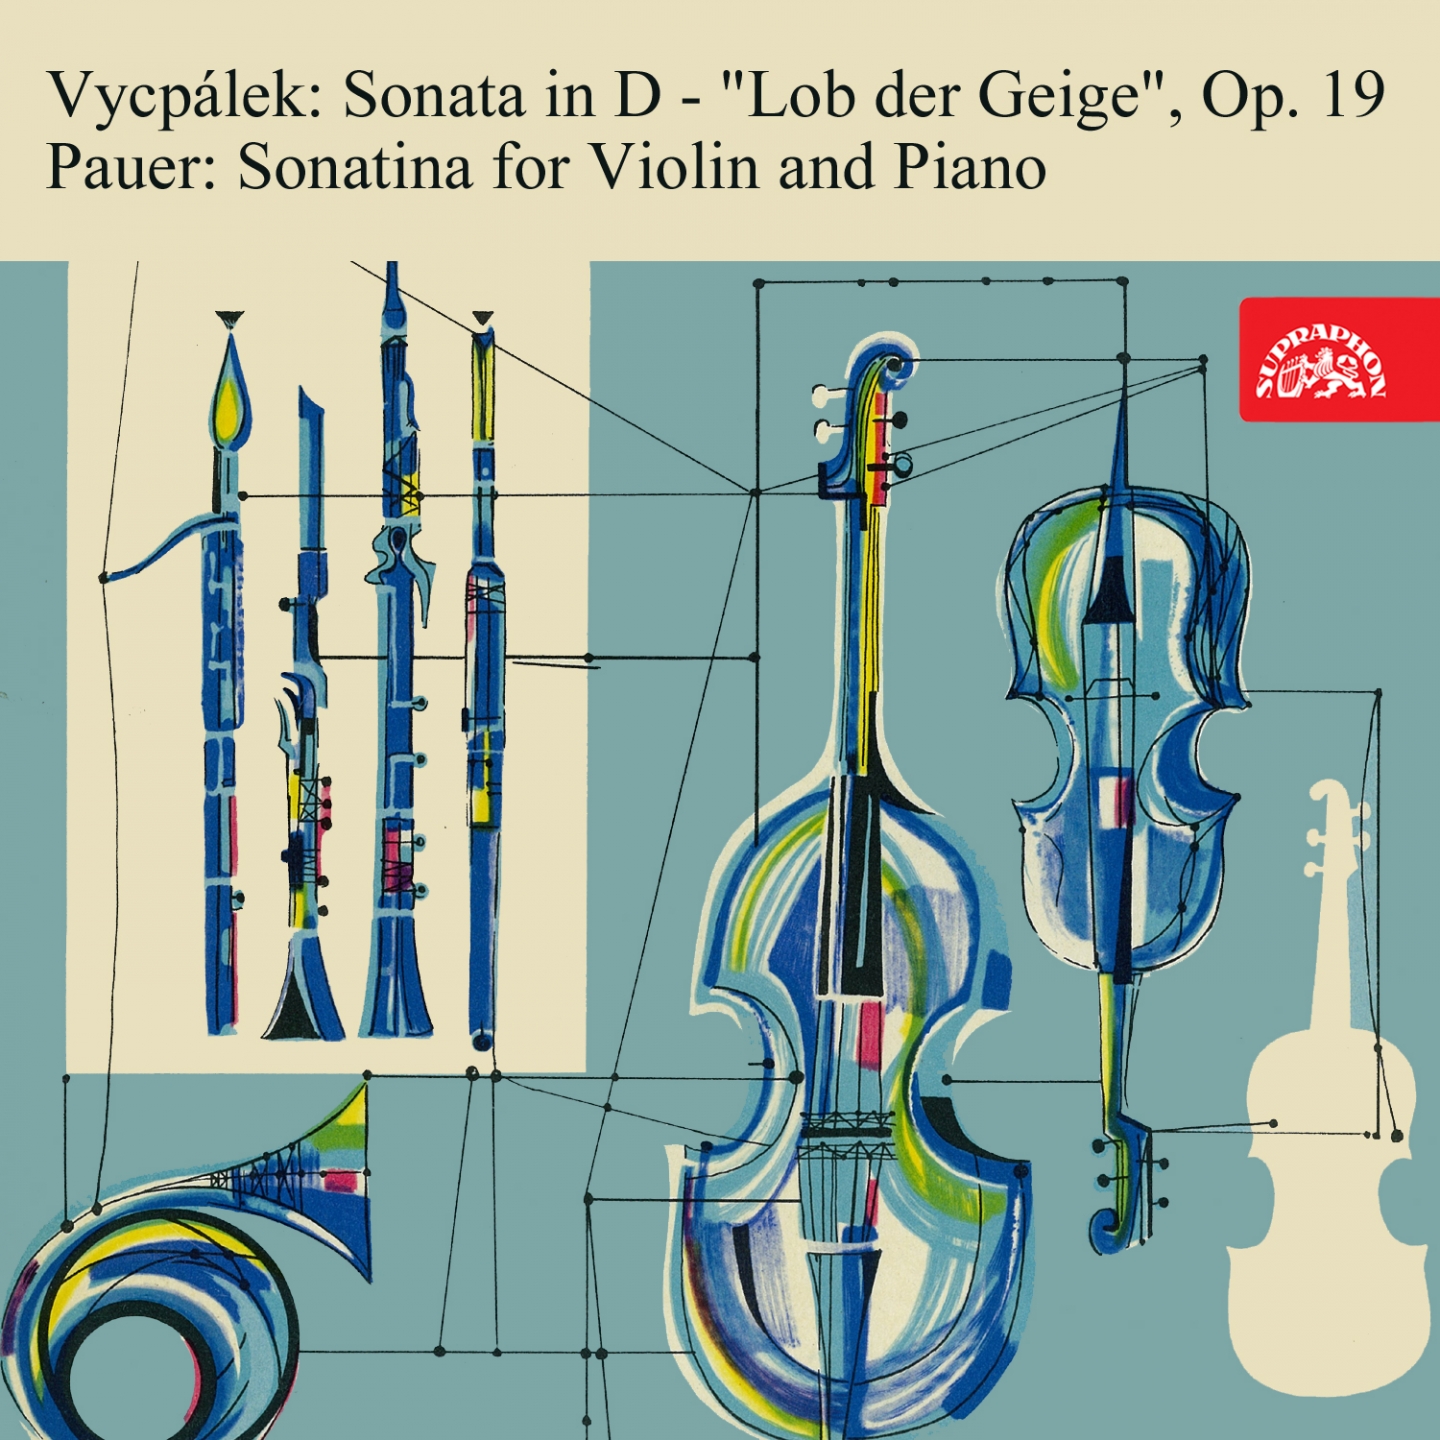 Vycpa lek: Sonata in D Major " Lob der Geige"  Pauer: Sonatina for Violin and Piano